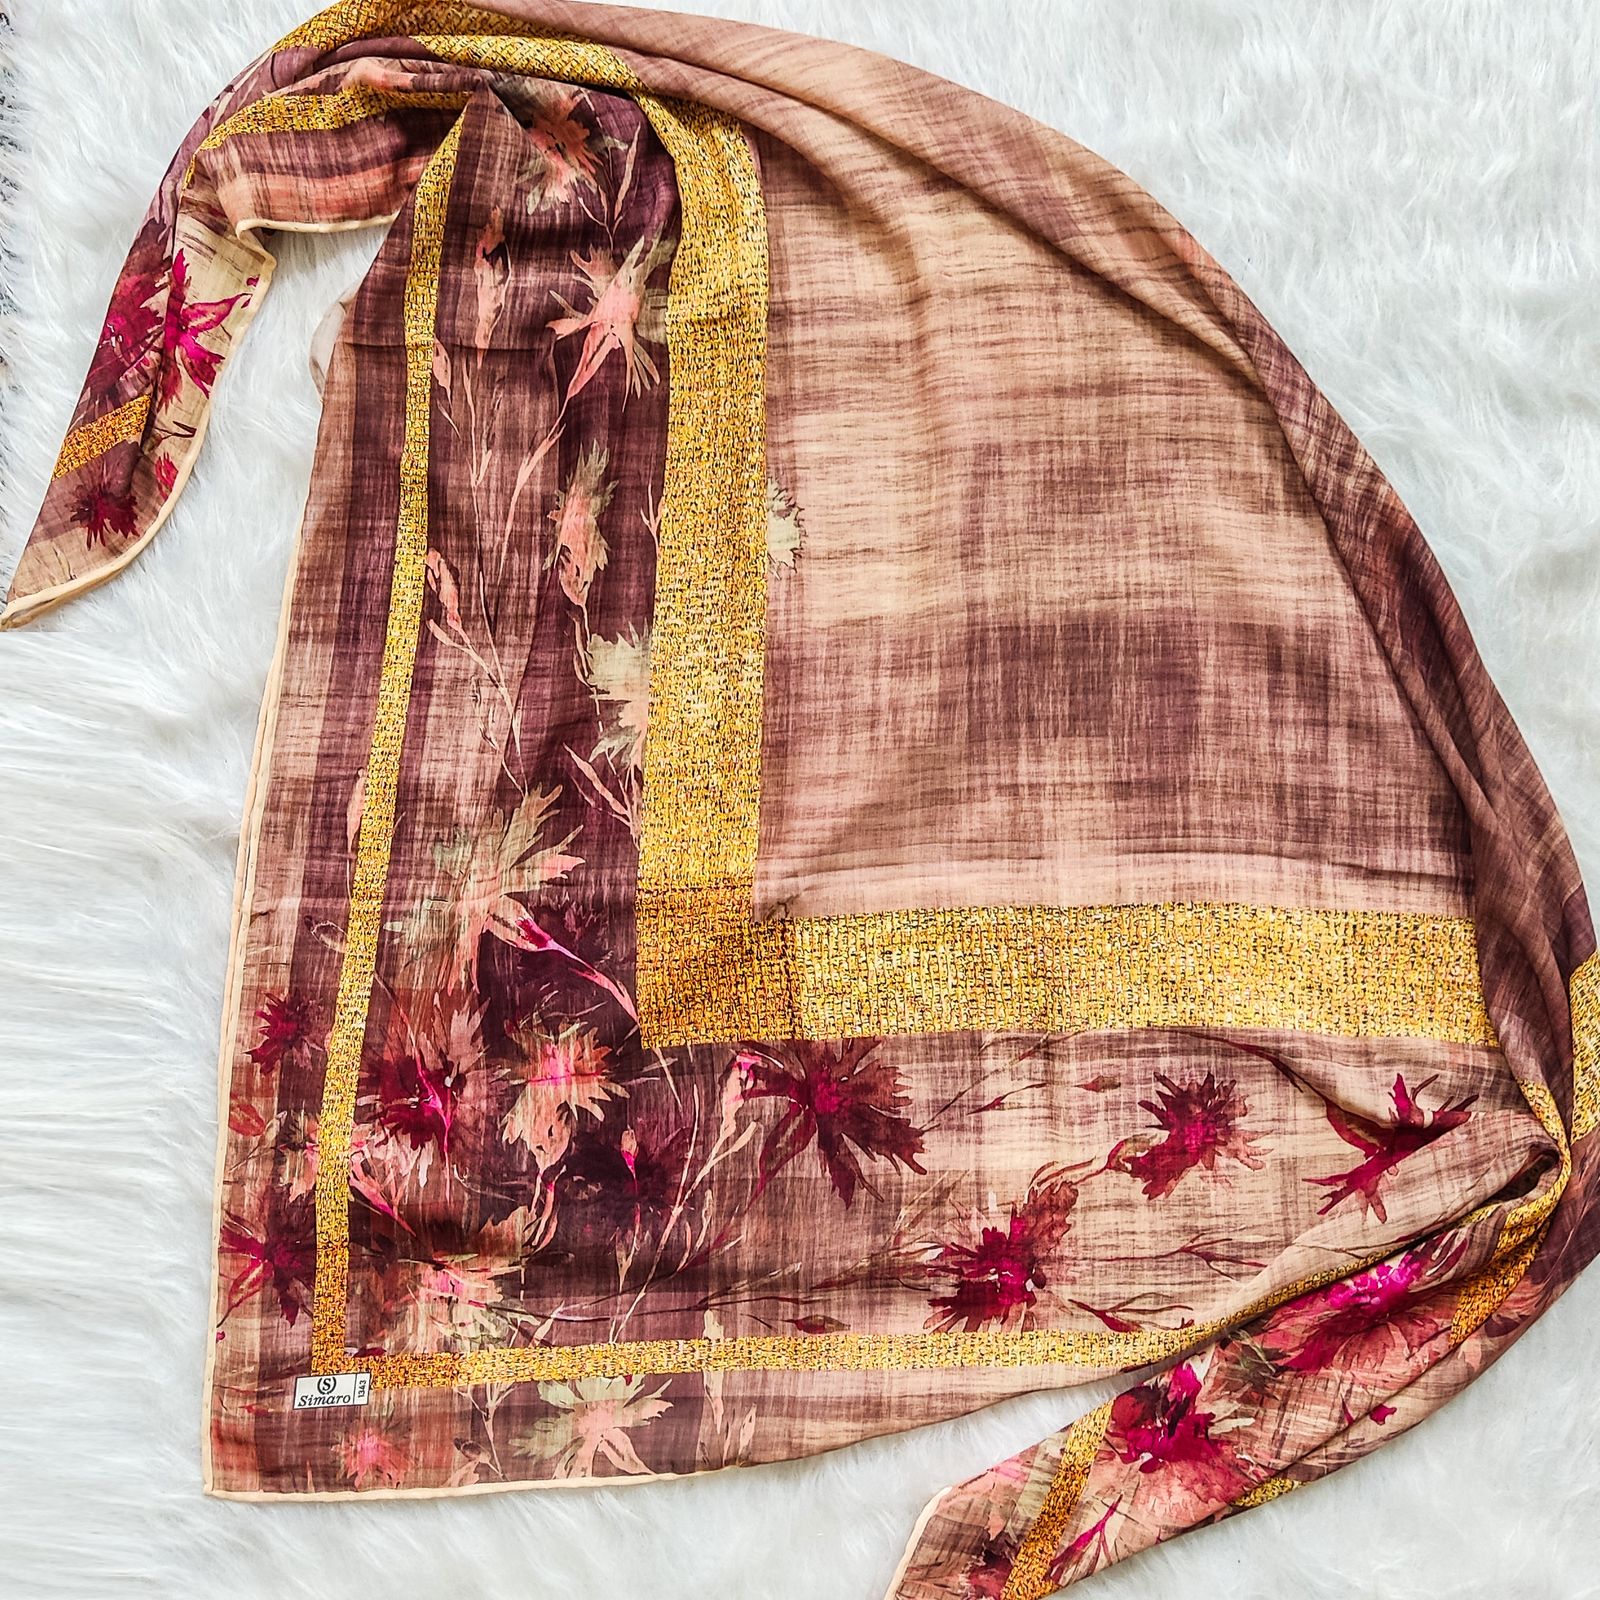 روسری زنانه مدل حریر ابریشم مجلسی کد 1161 -  - 4